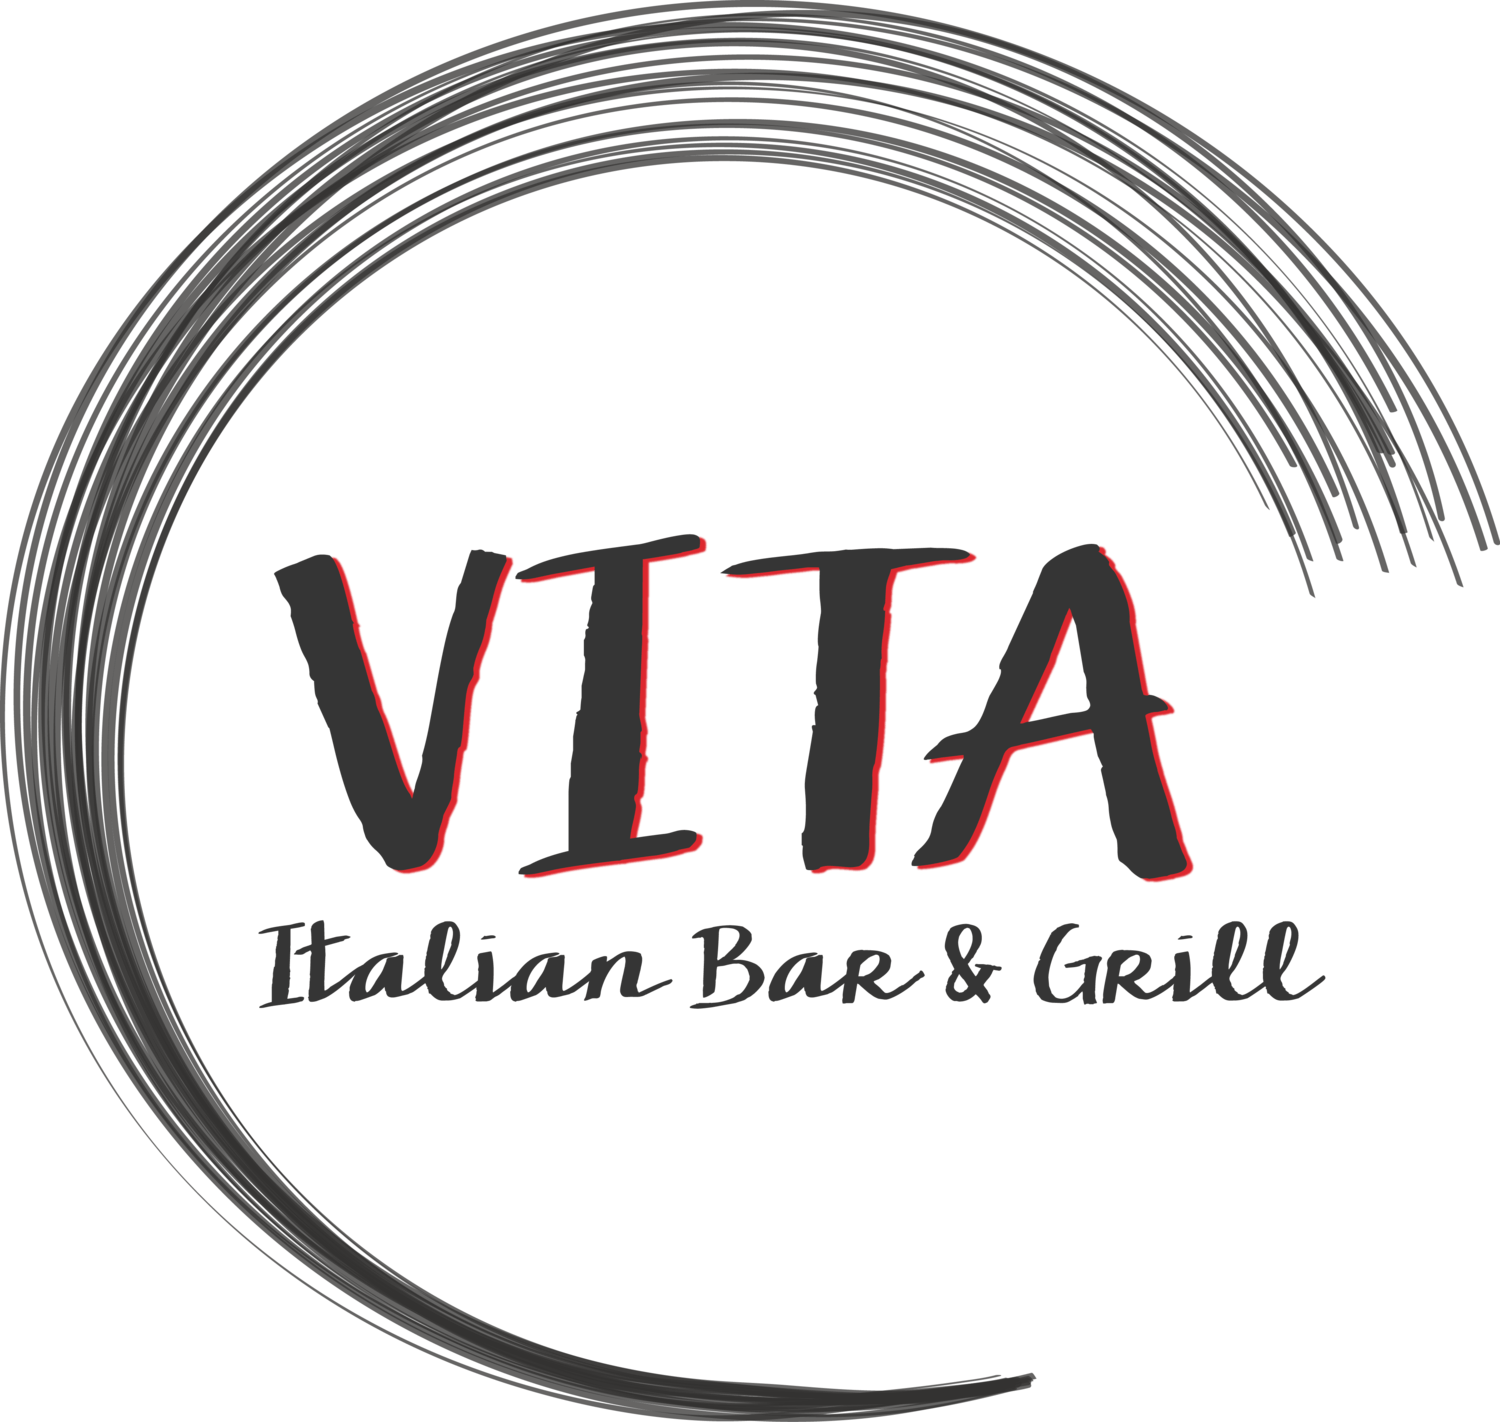 Restaurant Bar and Grill Logo - VITA Italian Bar & Grill